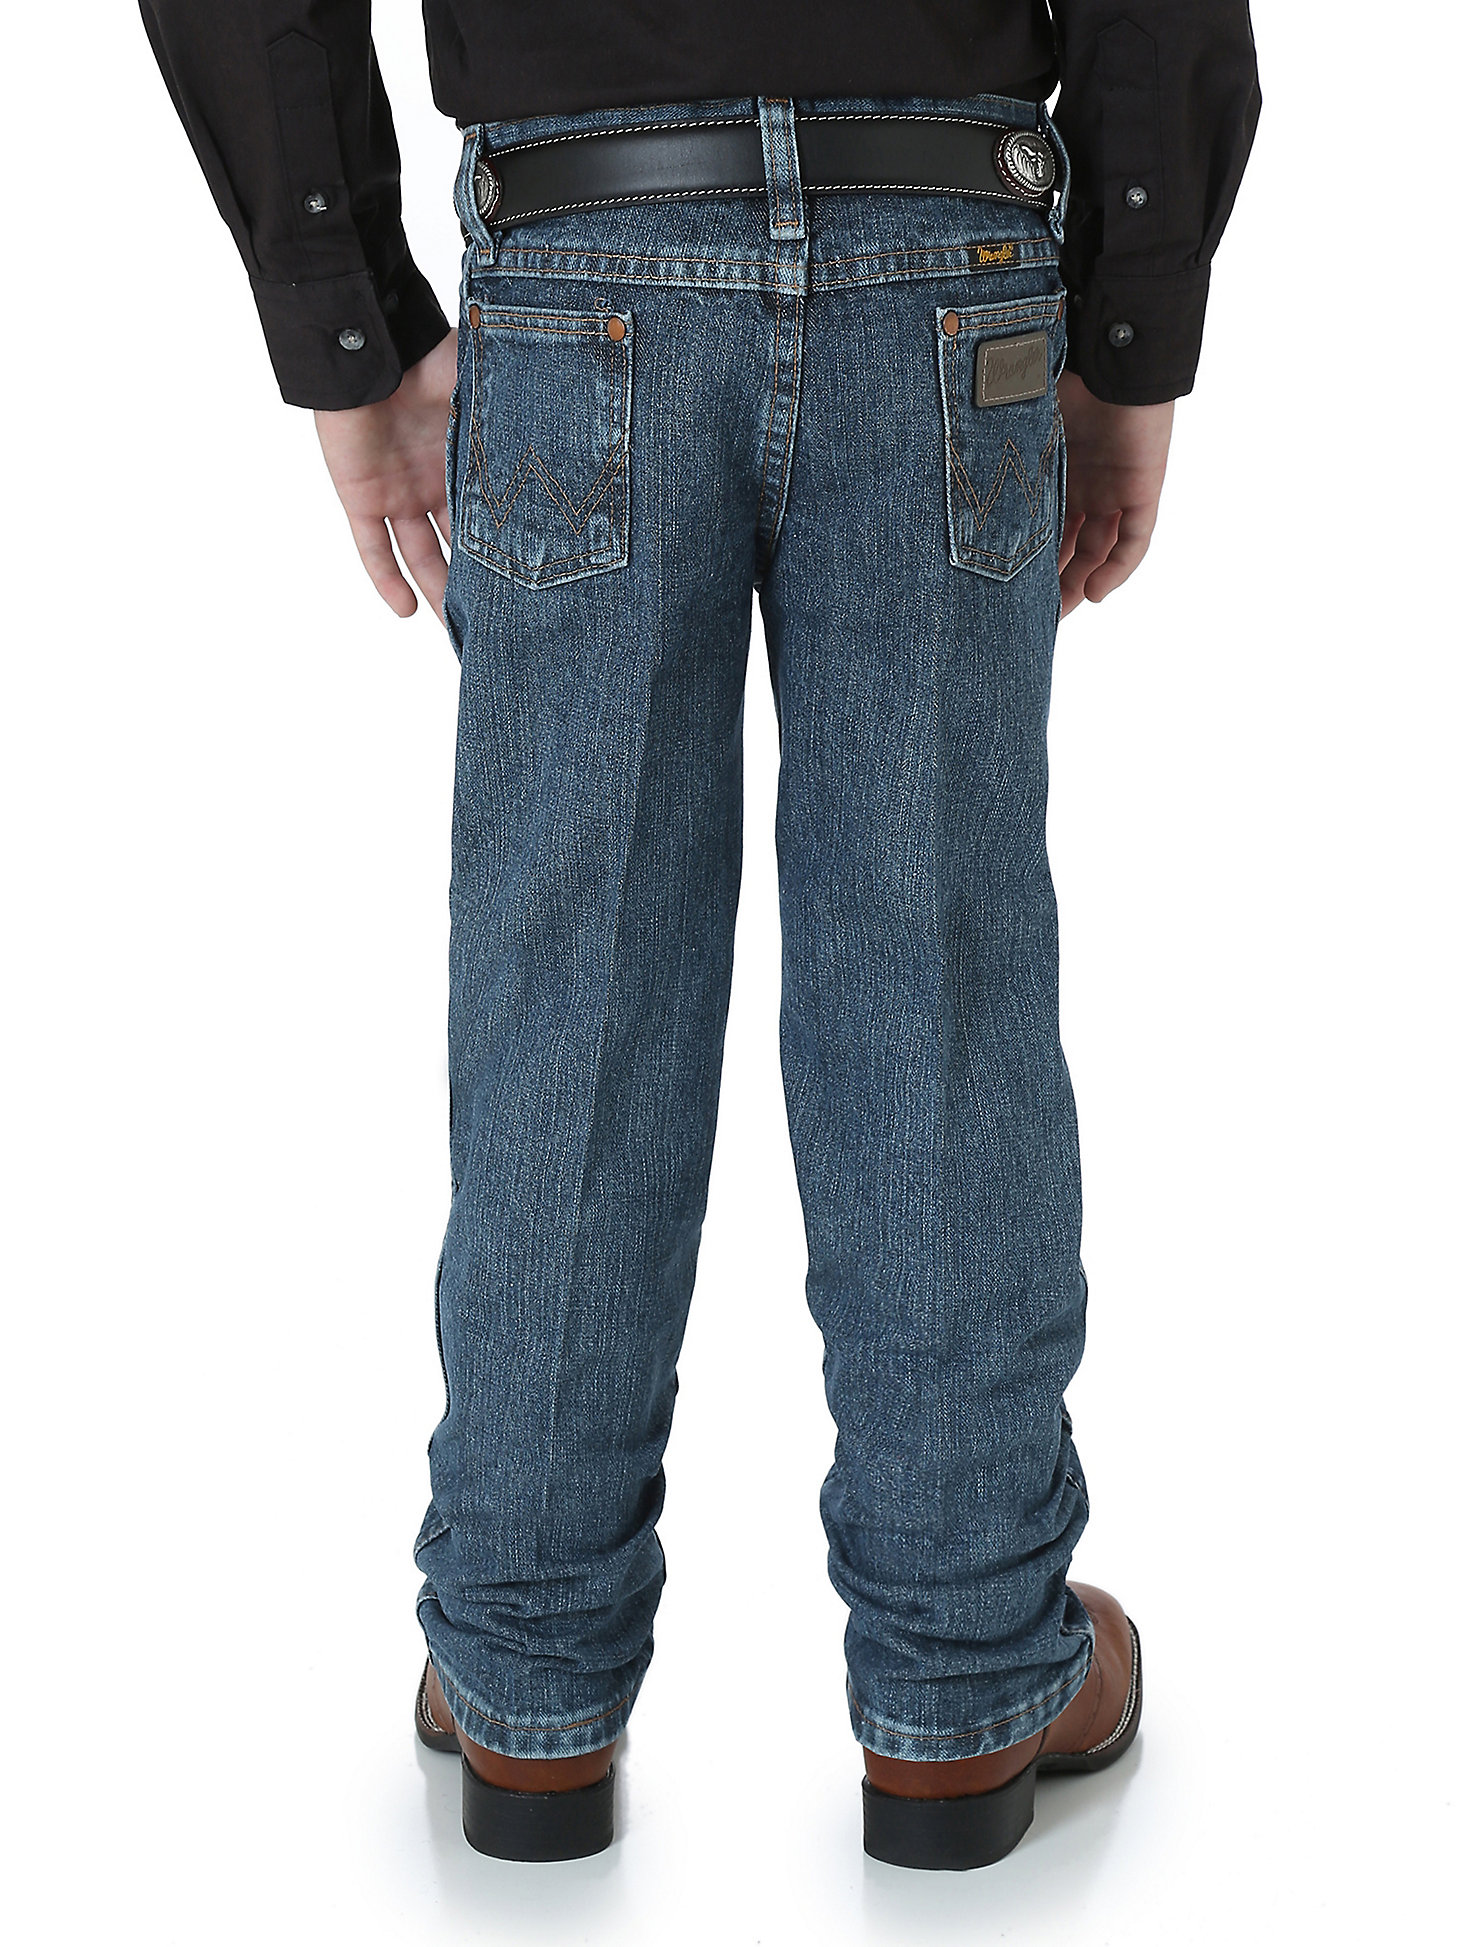 Toddler Boys Wrangler Adjustable Waist Slim Straight Jeans Size 2T Save on 2+ 